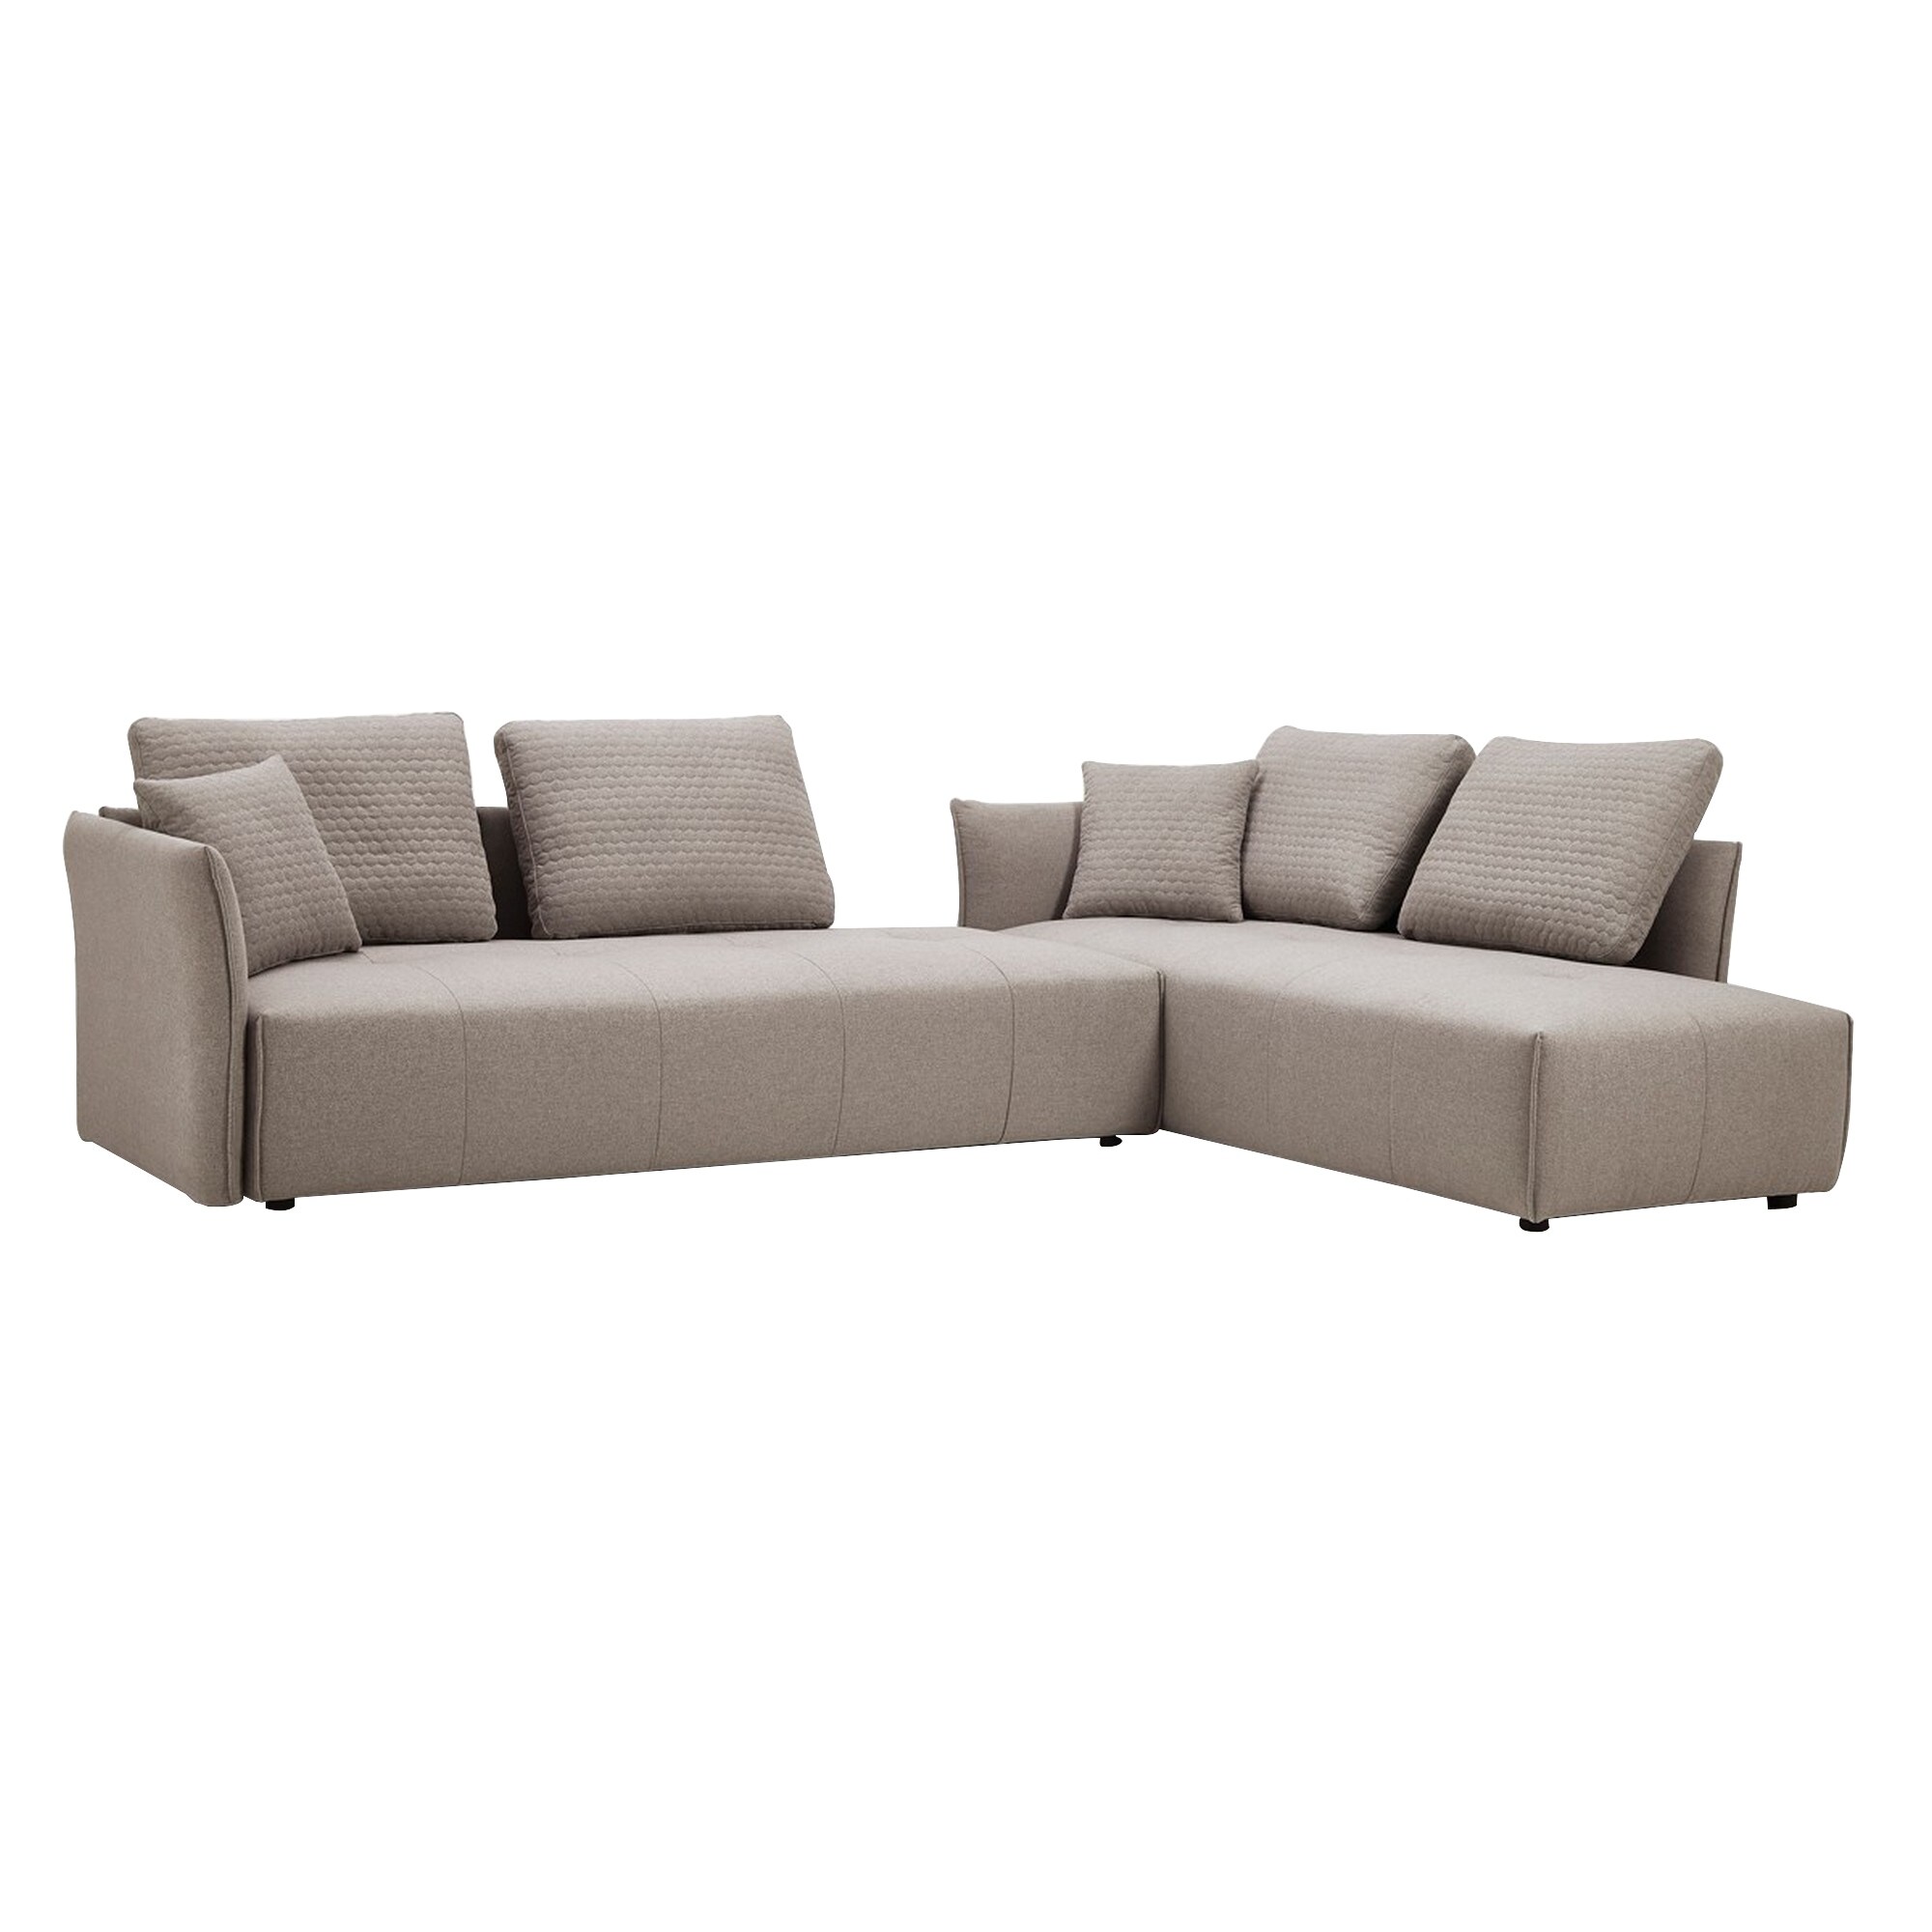 Fabric Upholstered Modular Sectional Sofa Bed, Light Gray